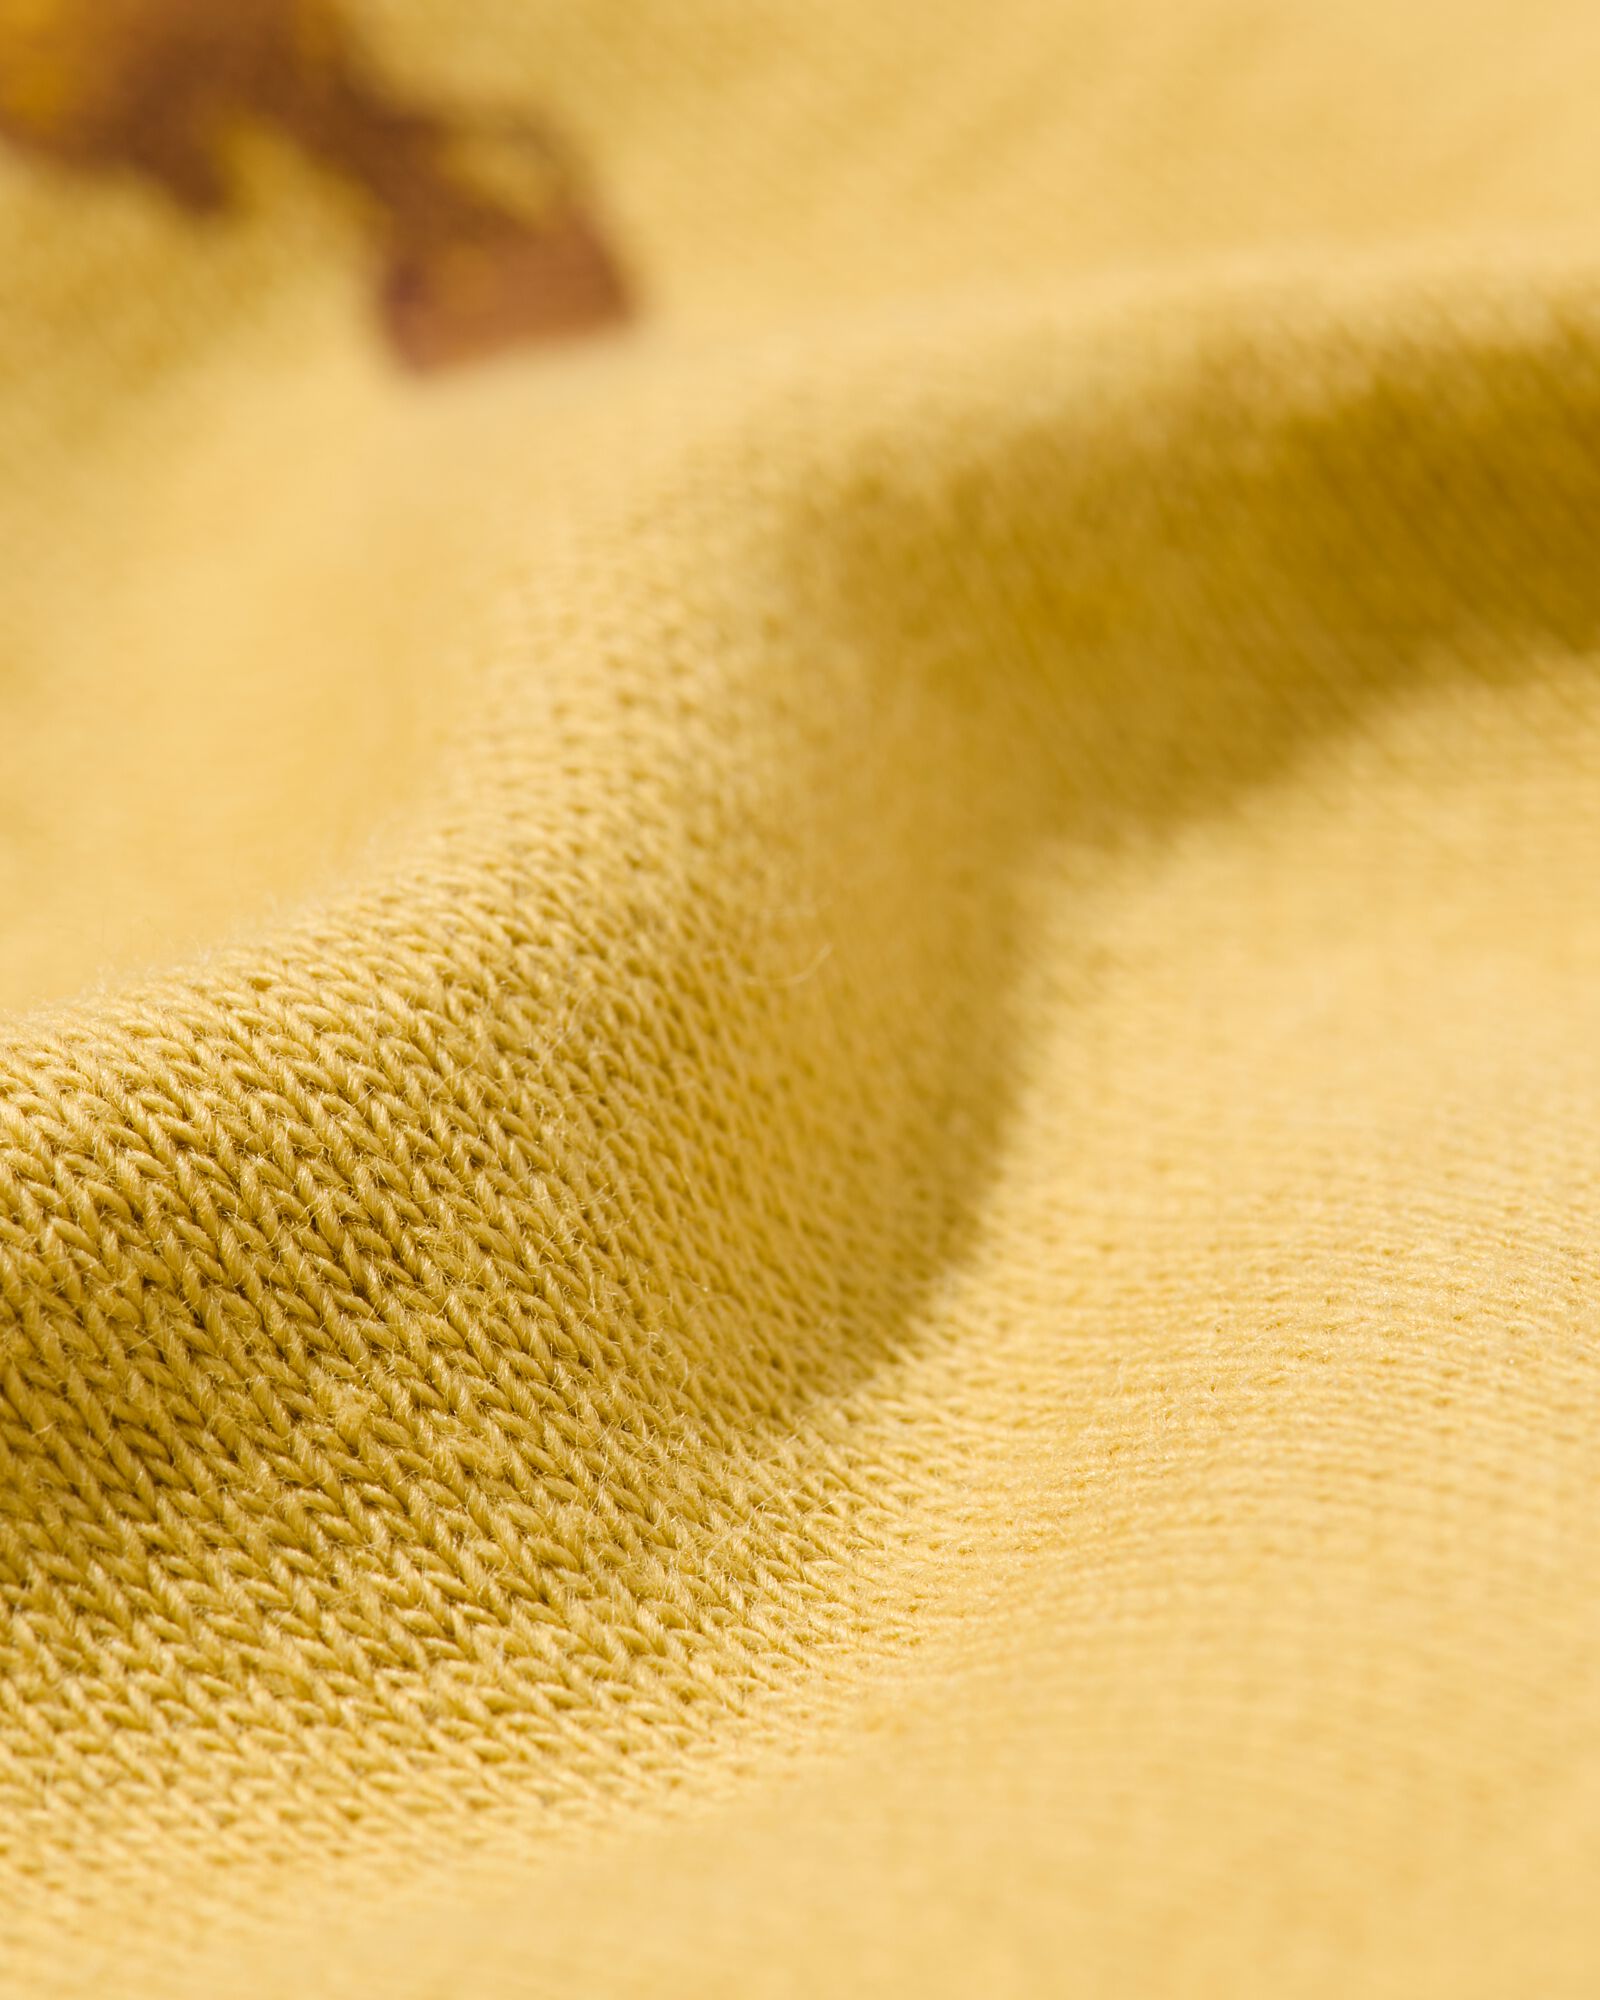 kinder sweater bizon geel 110/116 - 30770843 - HEMA